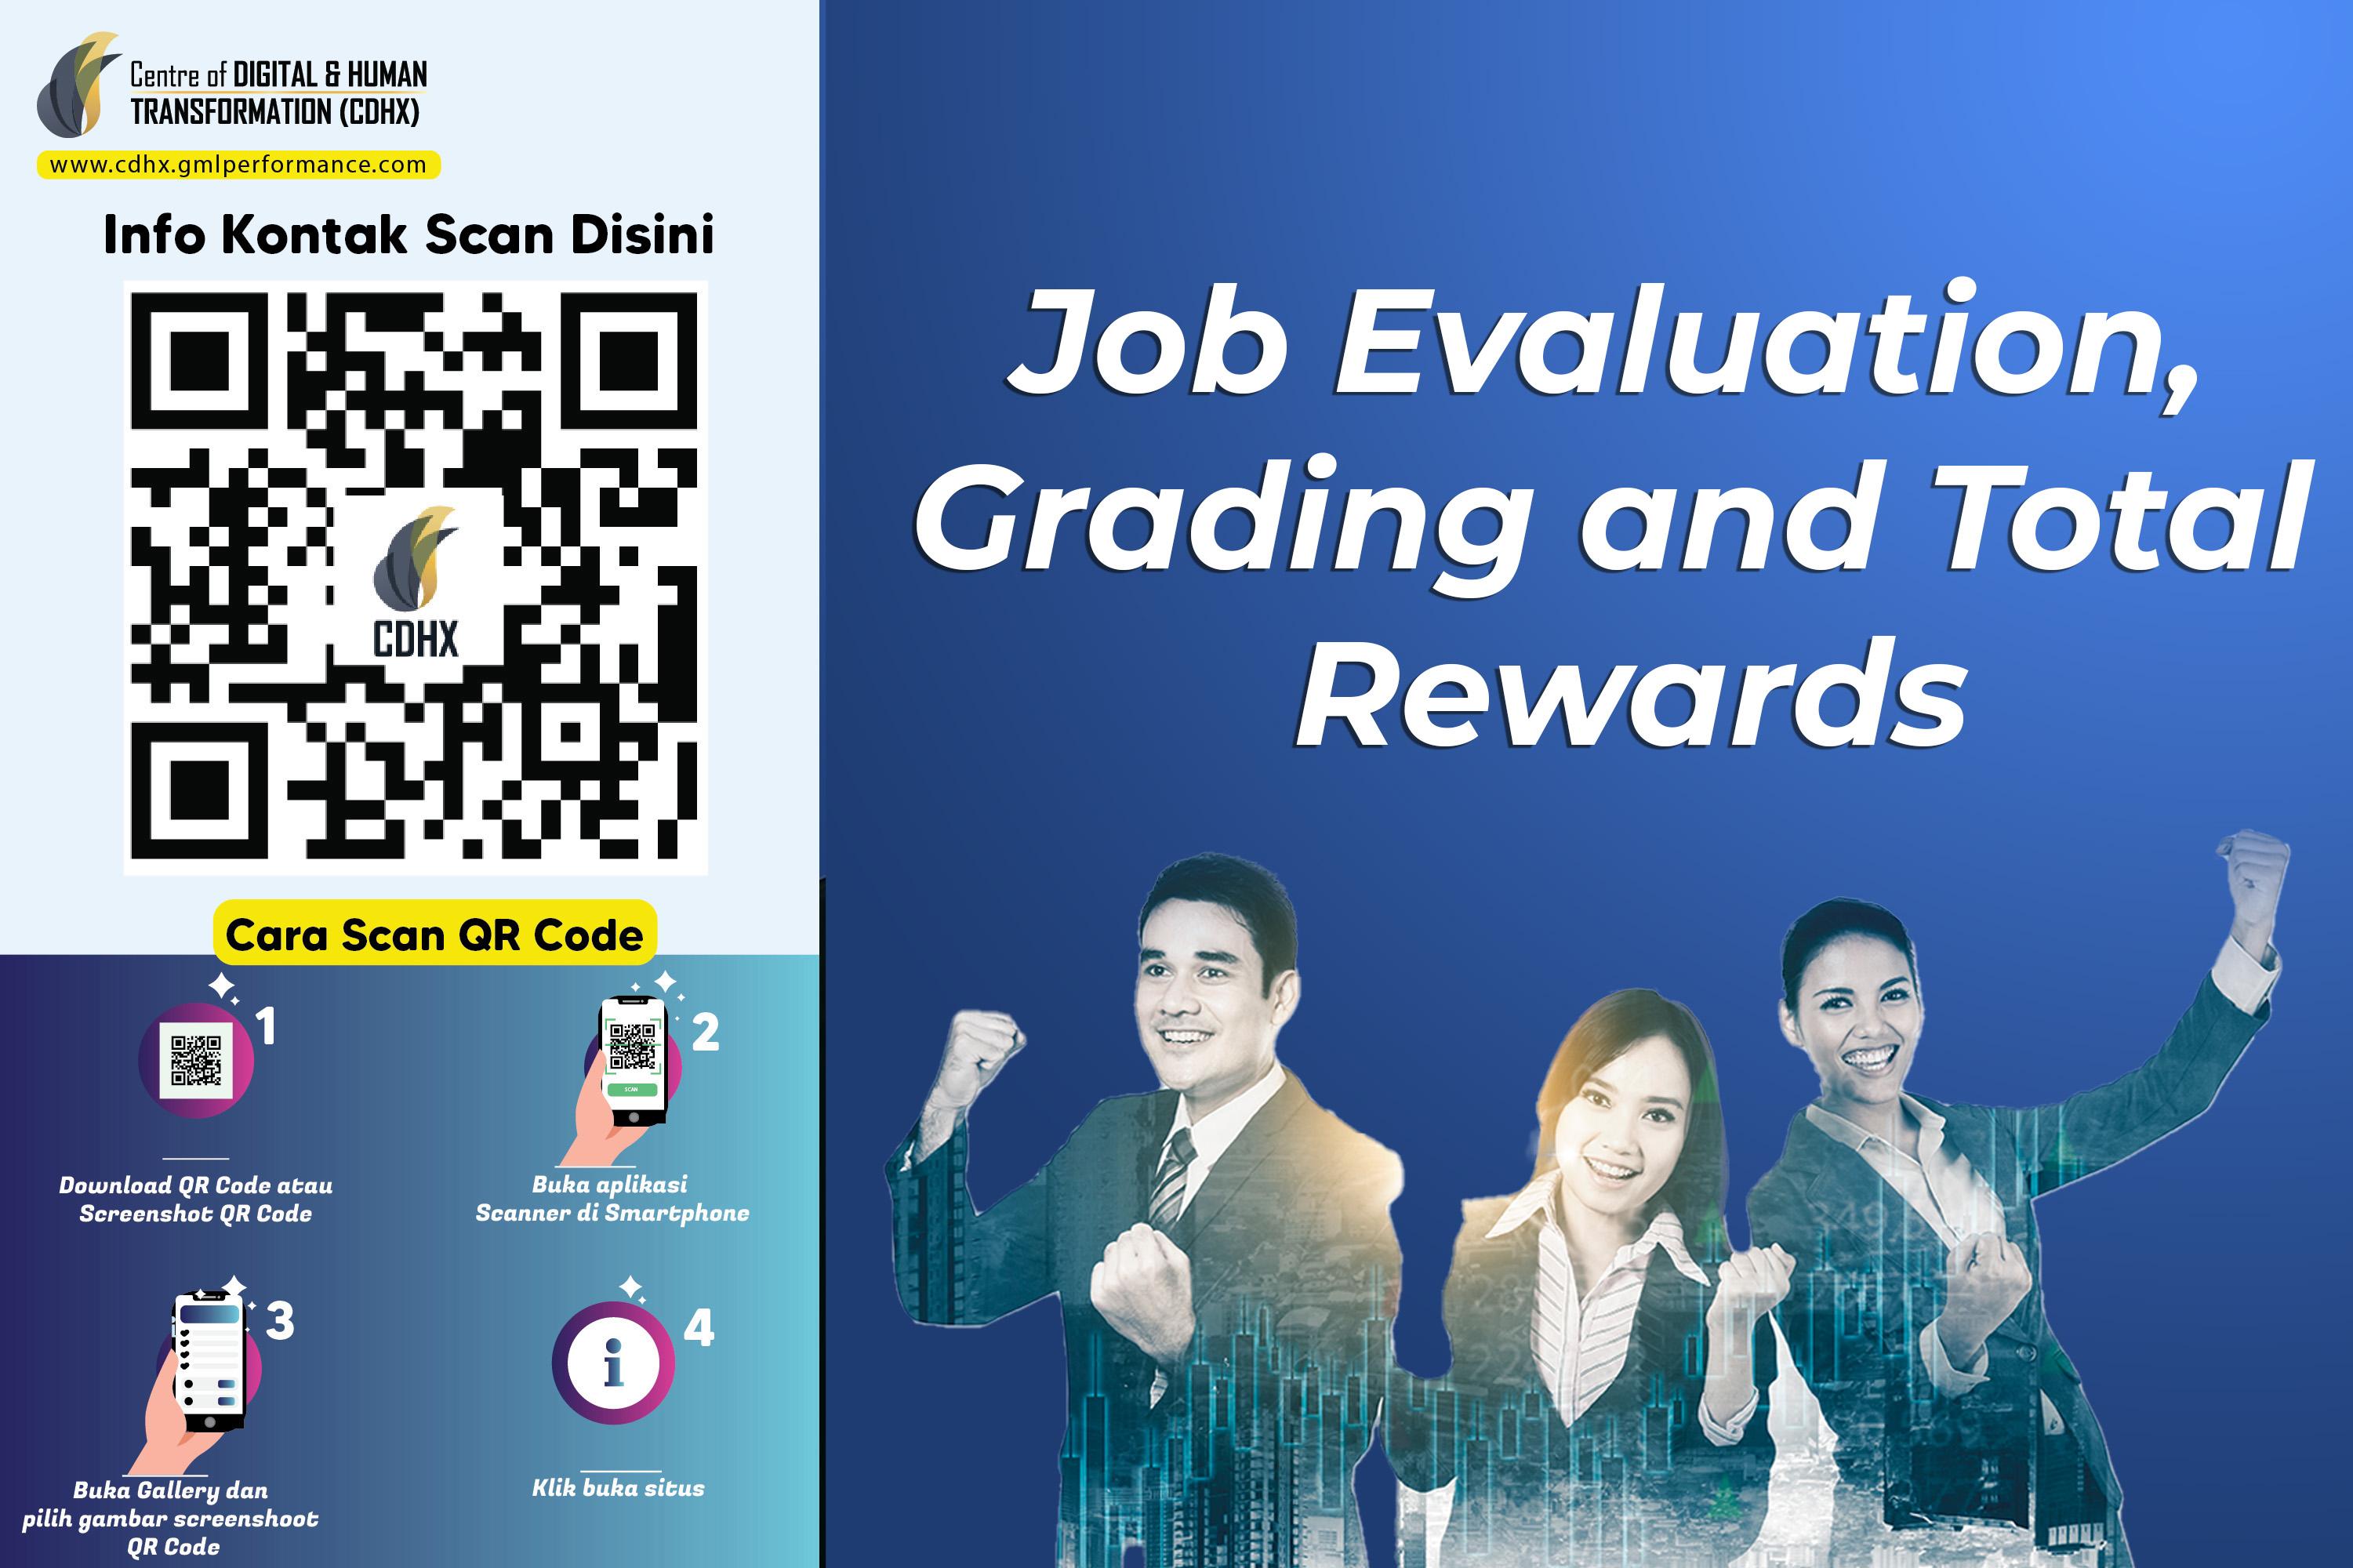 Job Evaluation, Grading and Total Rewards